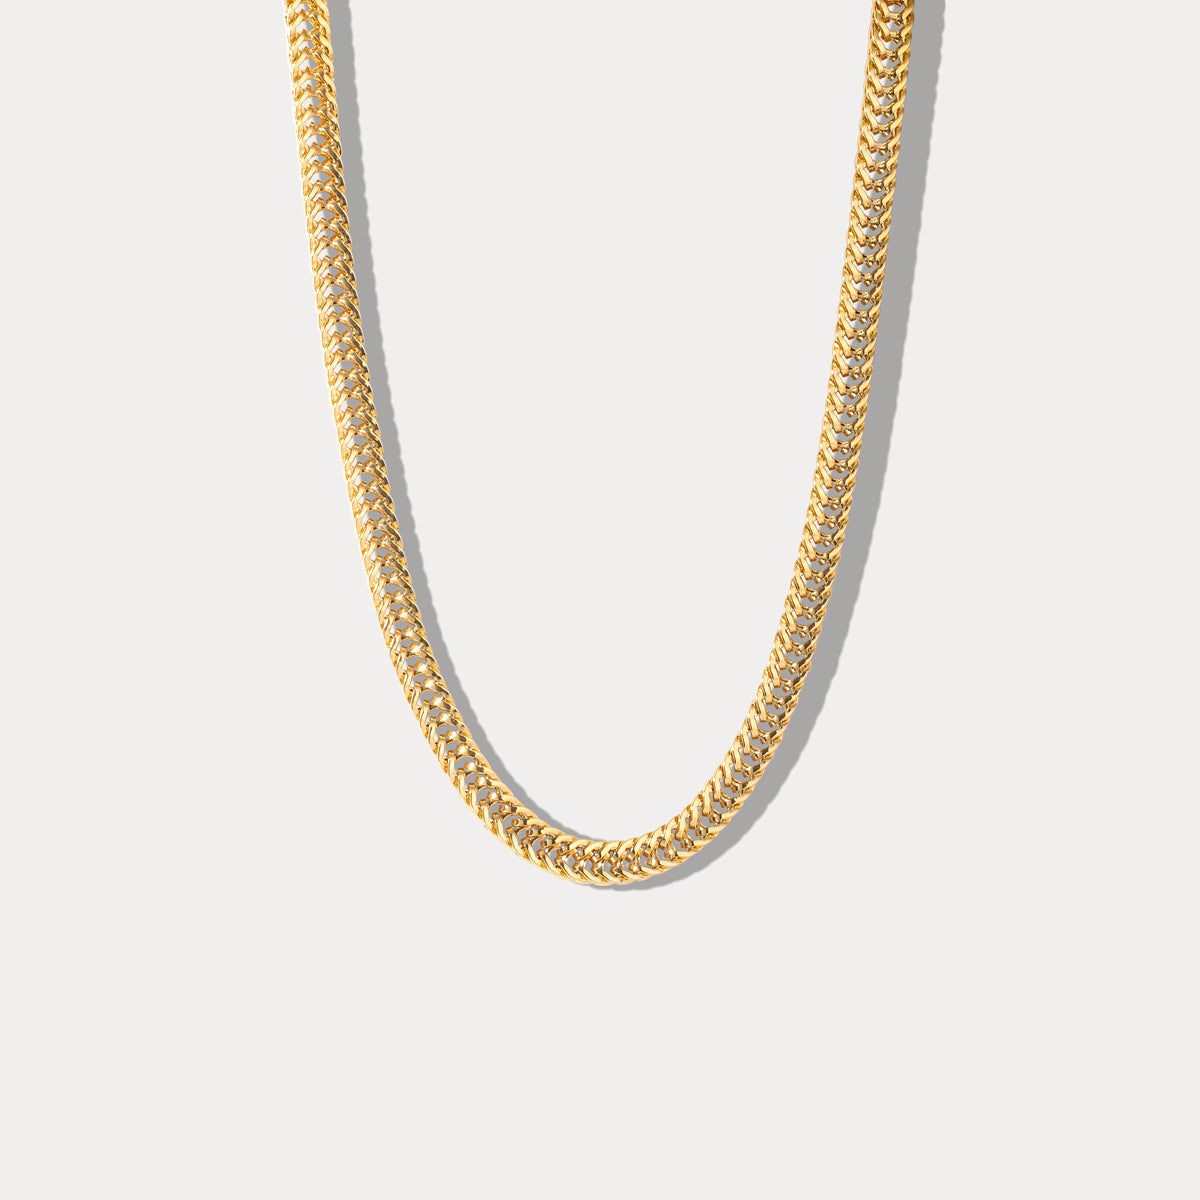 Selenichast franco snake chain necklace